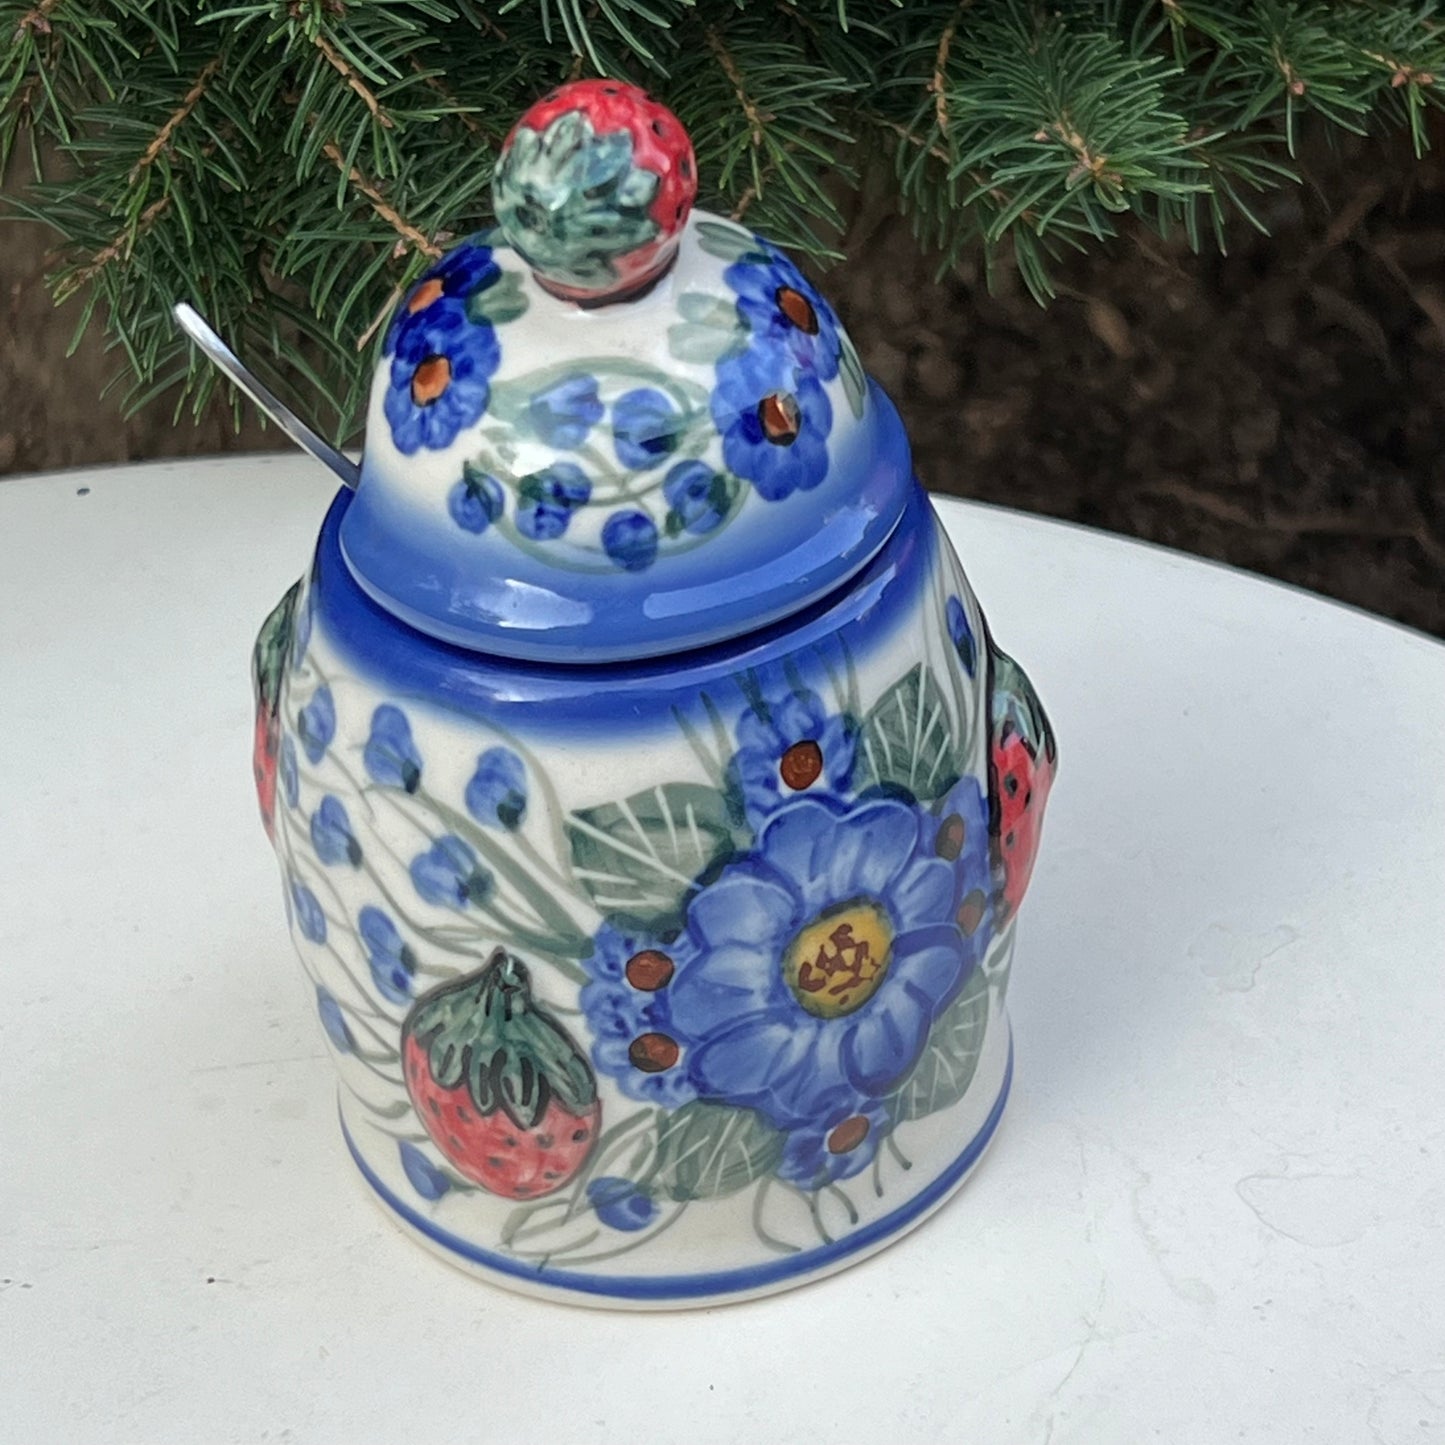 Polish Pottery Covered Jam Jar by Andy Unikat